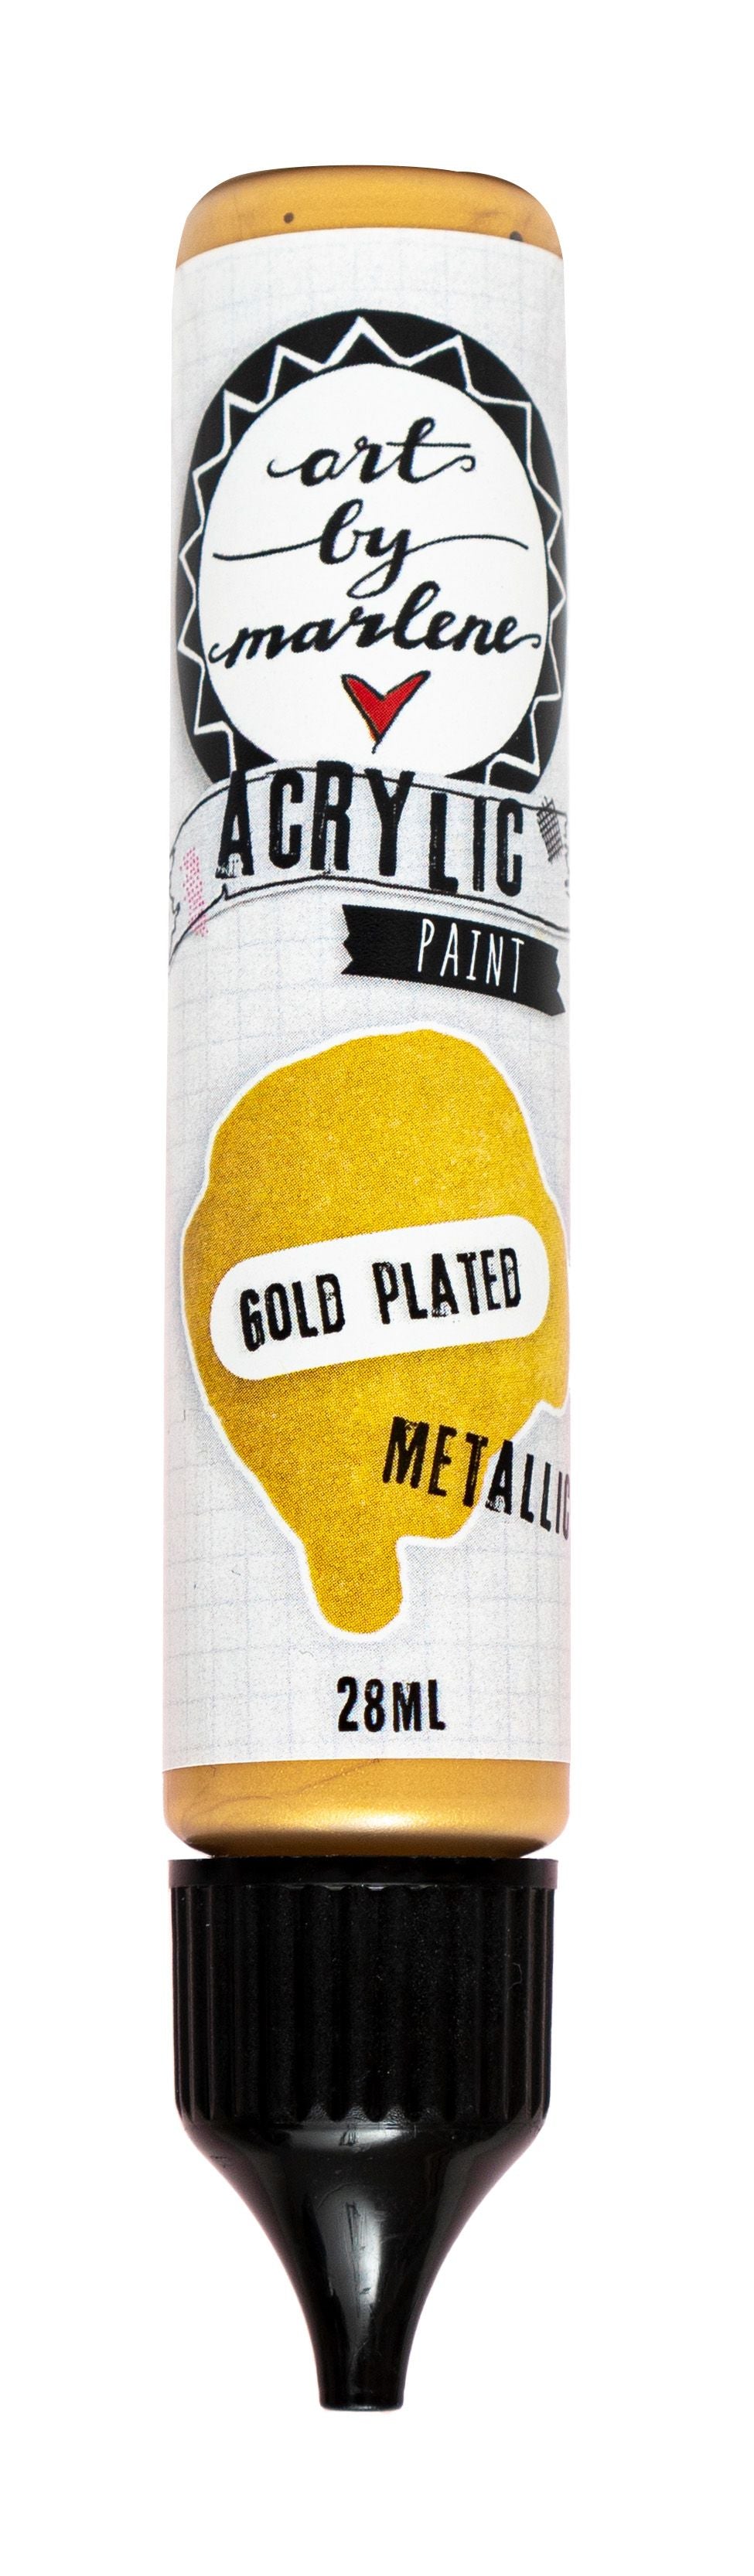 Art By Marlene - Acrylic Paint - Gold Plate Metalic